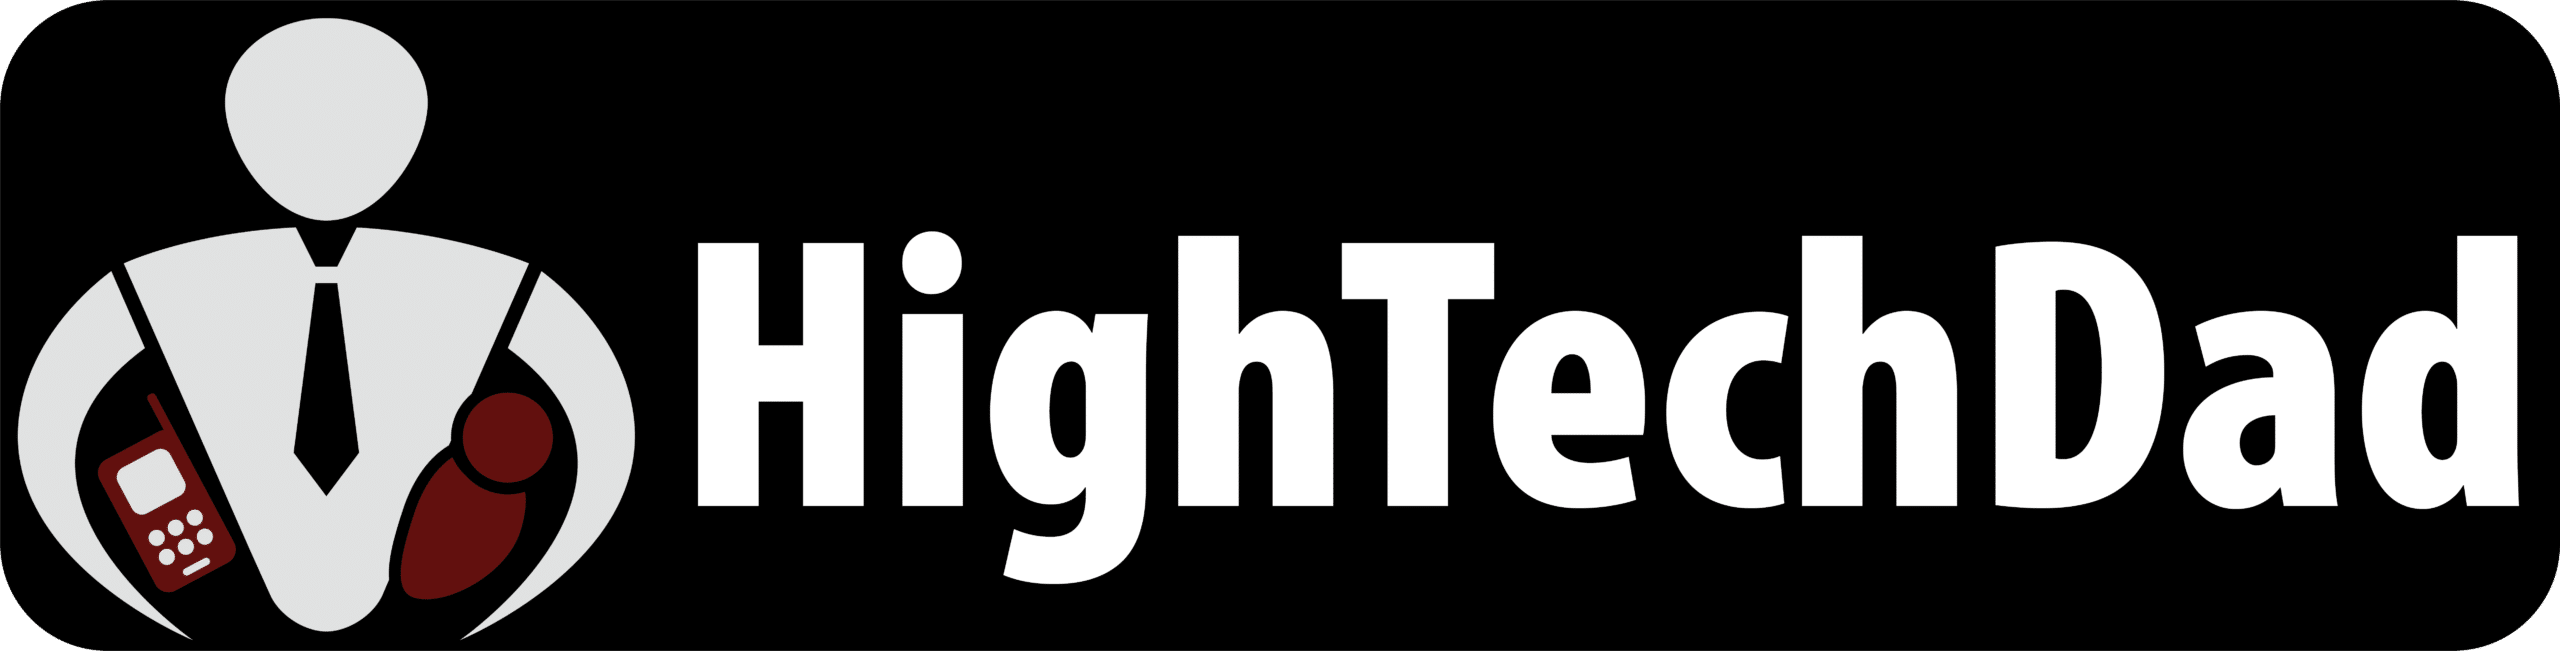 HighTechDad logo with black background